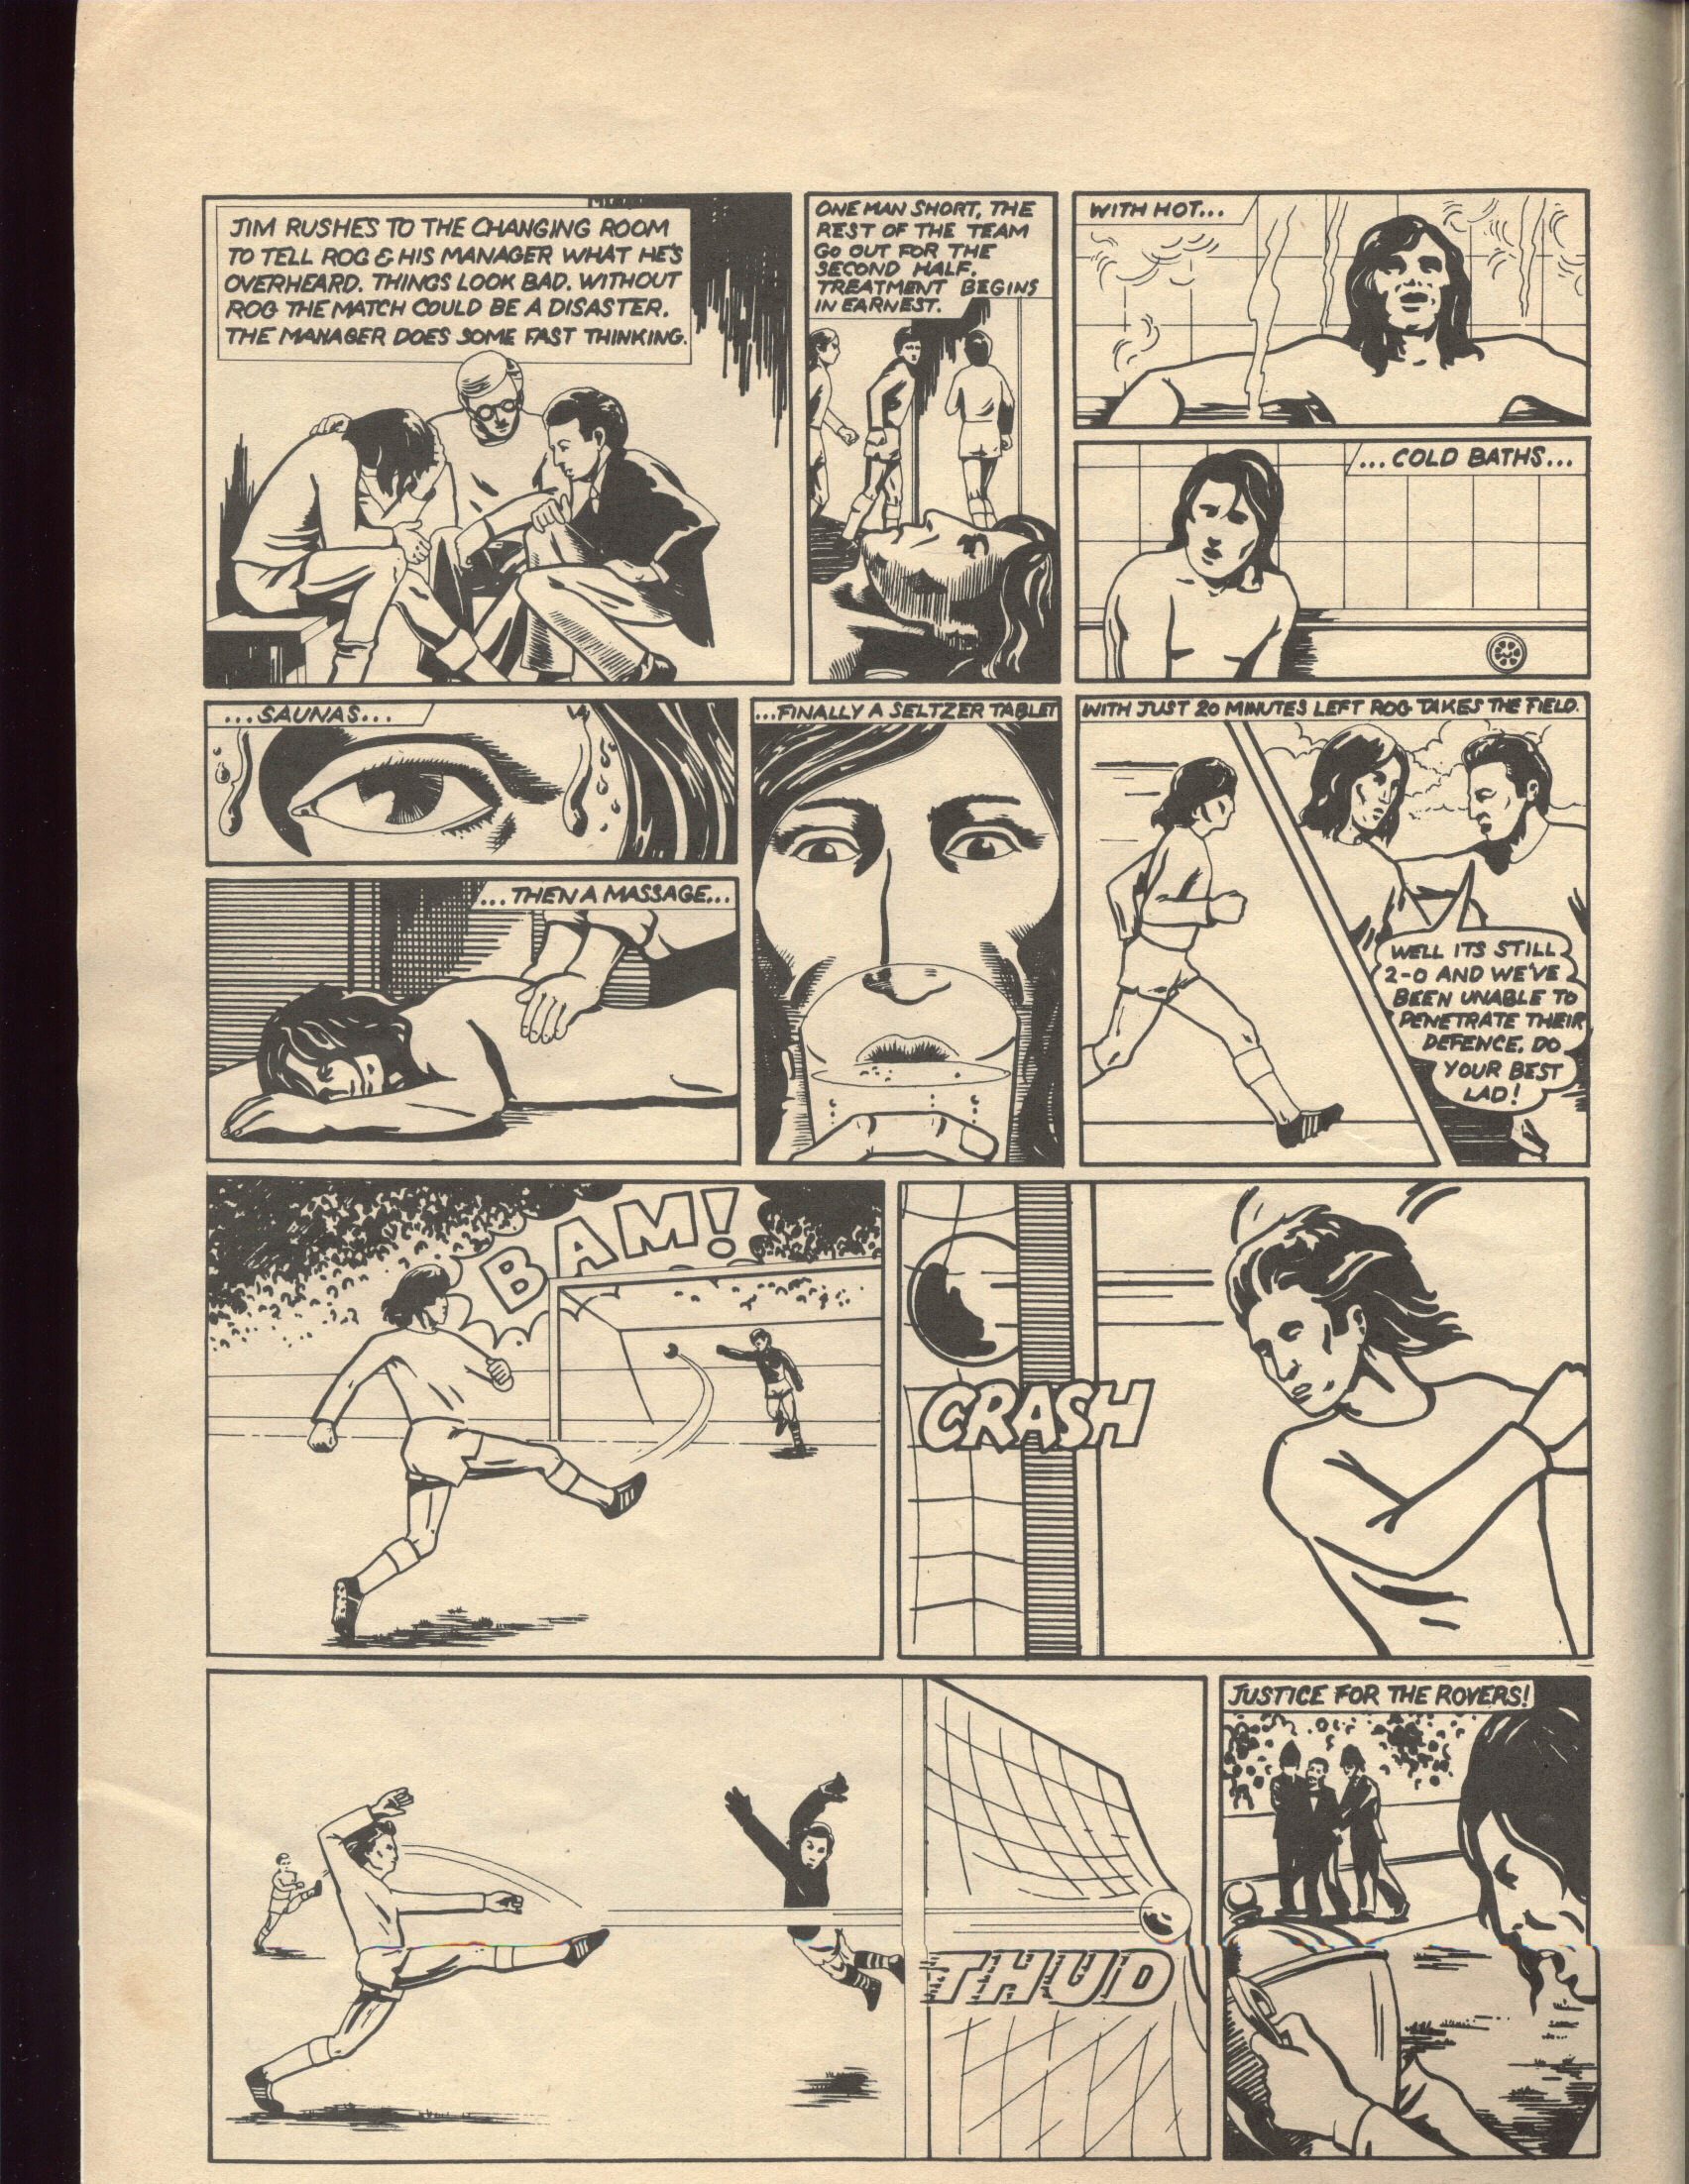 Pink Floyd 1975 Tour Comic Book_04.JPG